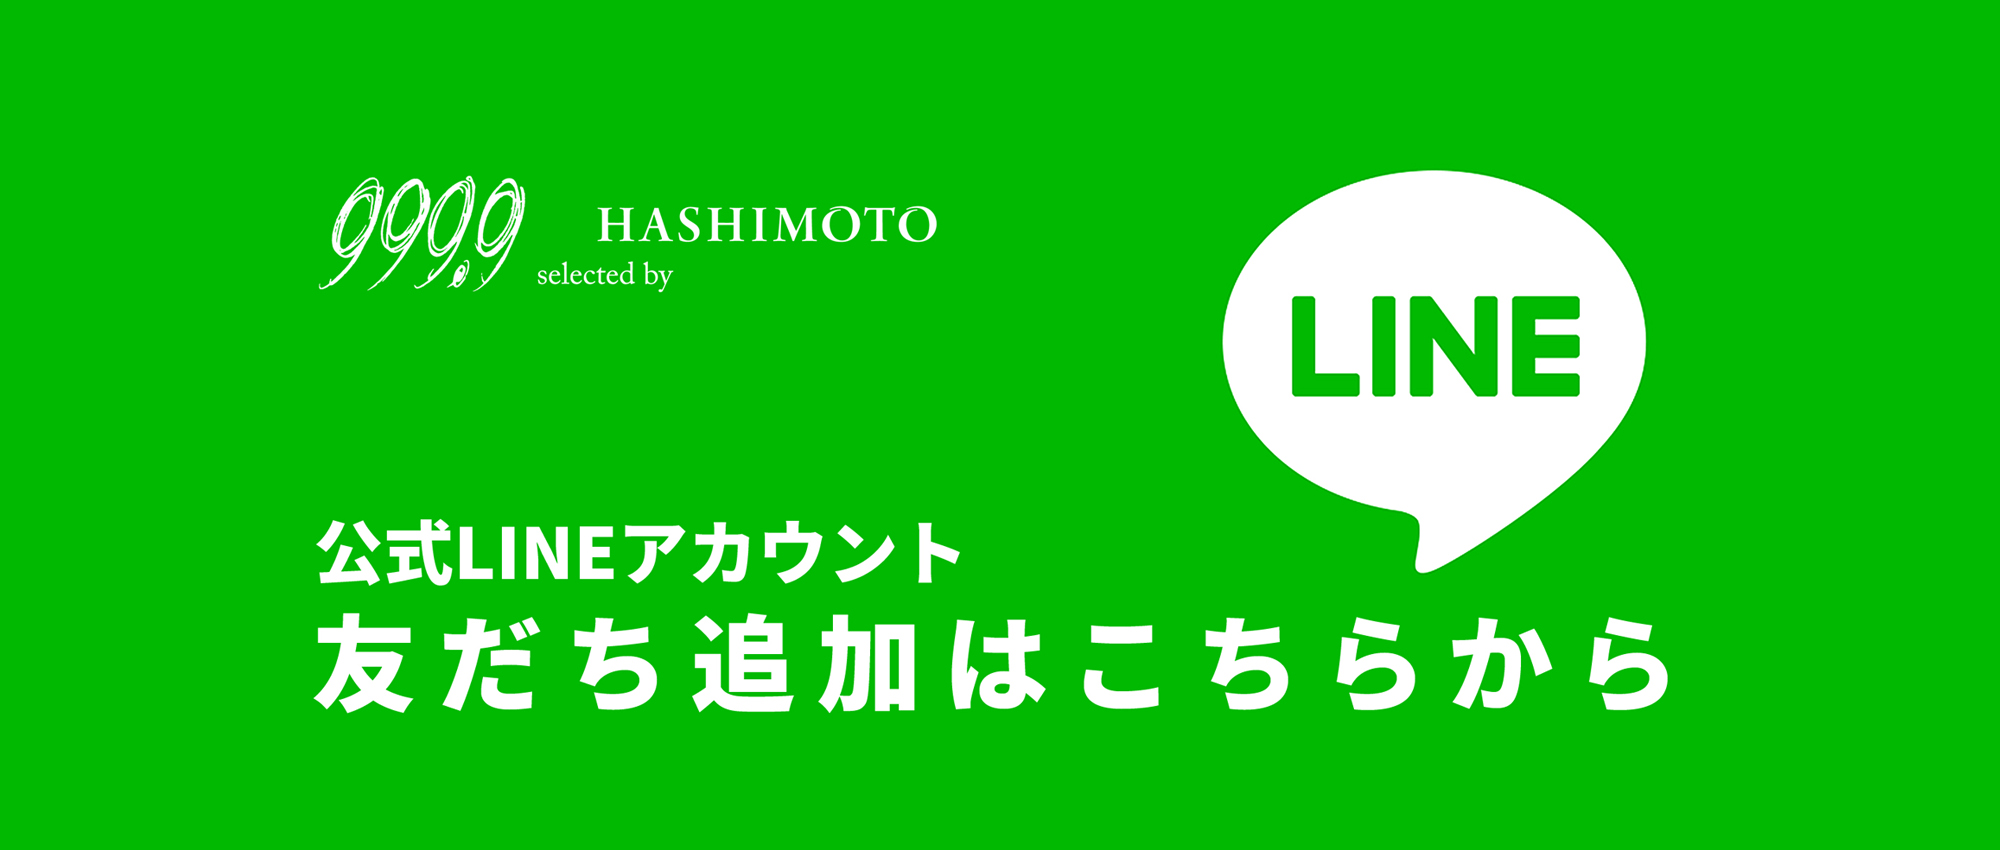 999.9 selected by HASHIMOTO LINE公式アカウント友だち追加案内